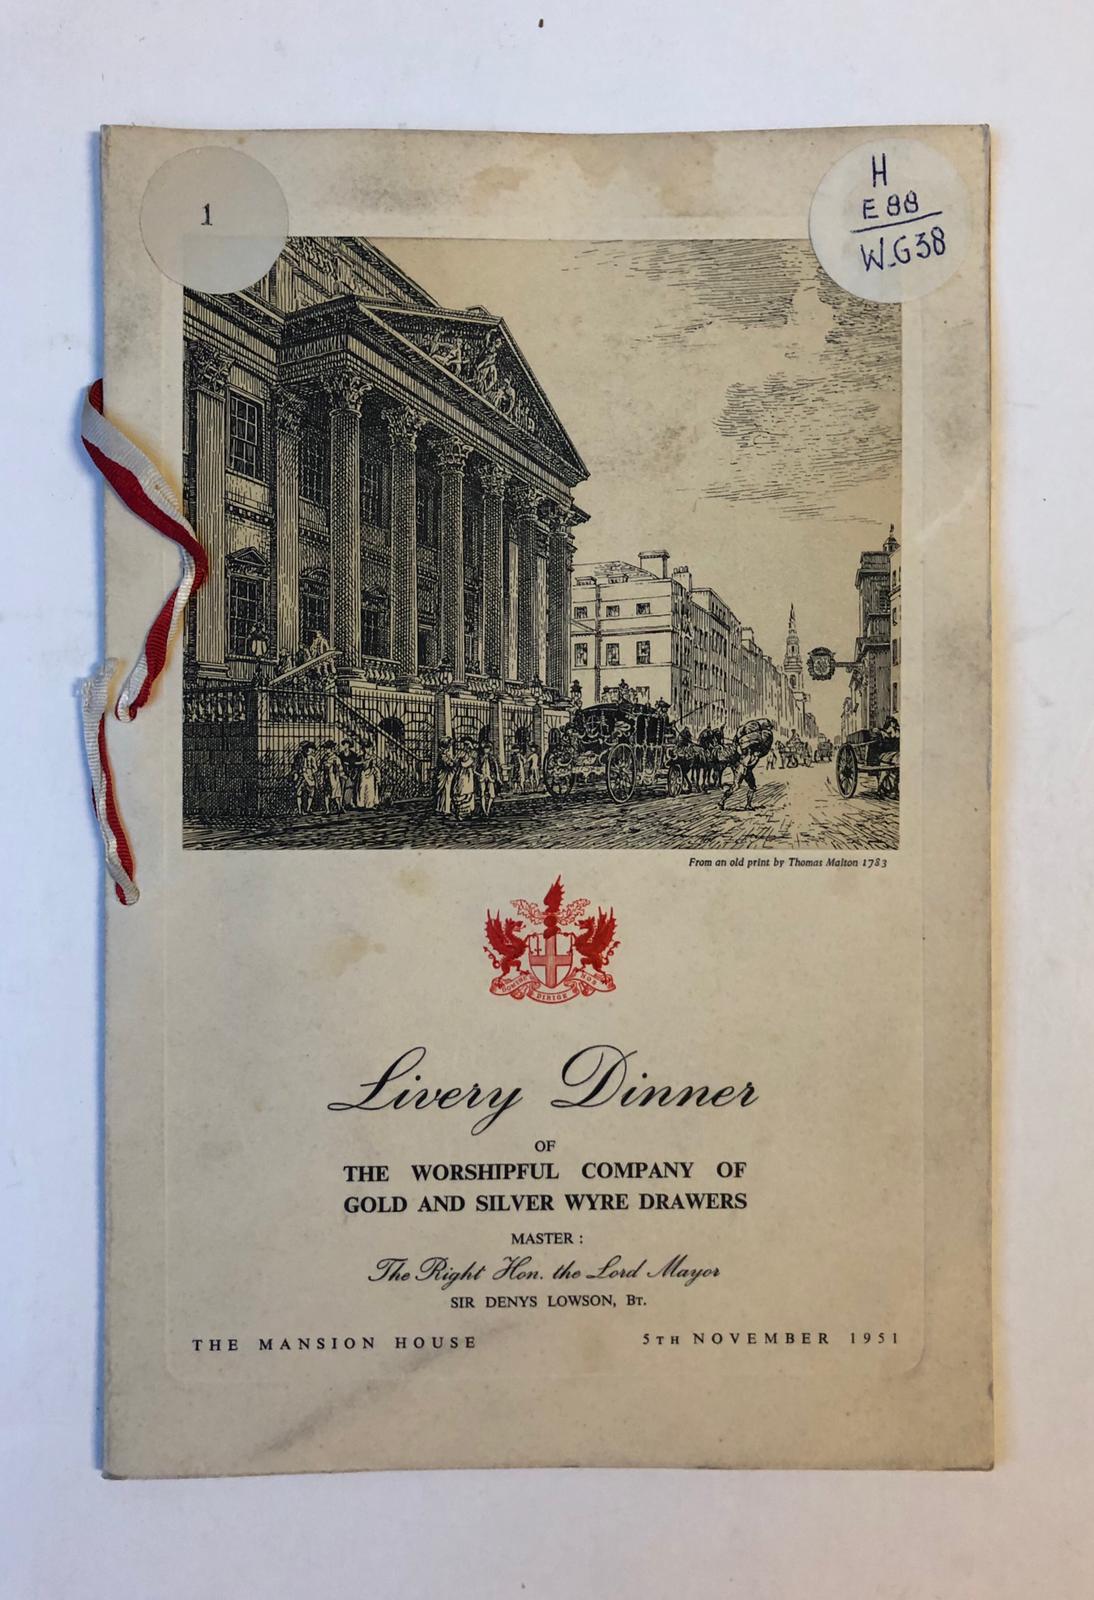  - LONDEN, WAPENS VAN DE LIVERY COMPANIES Menu voor het Livery Dinner van de Company of Gold and Silver wyre drawers, Mansion House 1951, 4, 8 p. gedrukt. Met afb. van alle 79 gildenwapens van de Livery Companies of London.